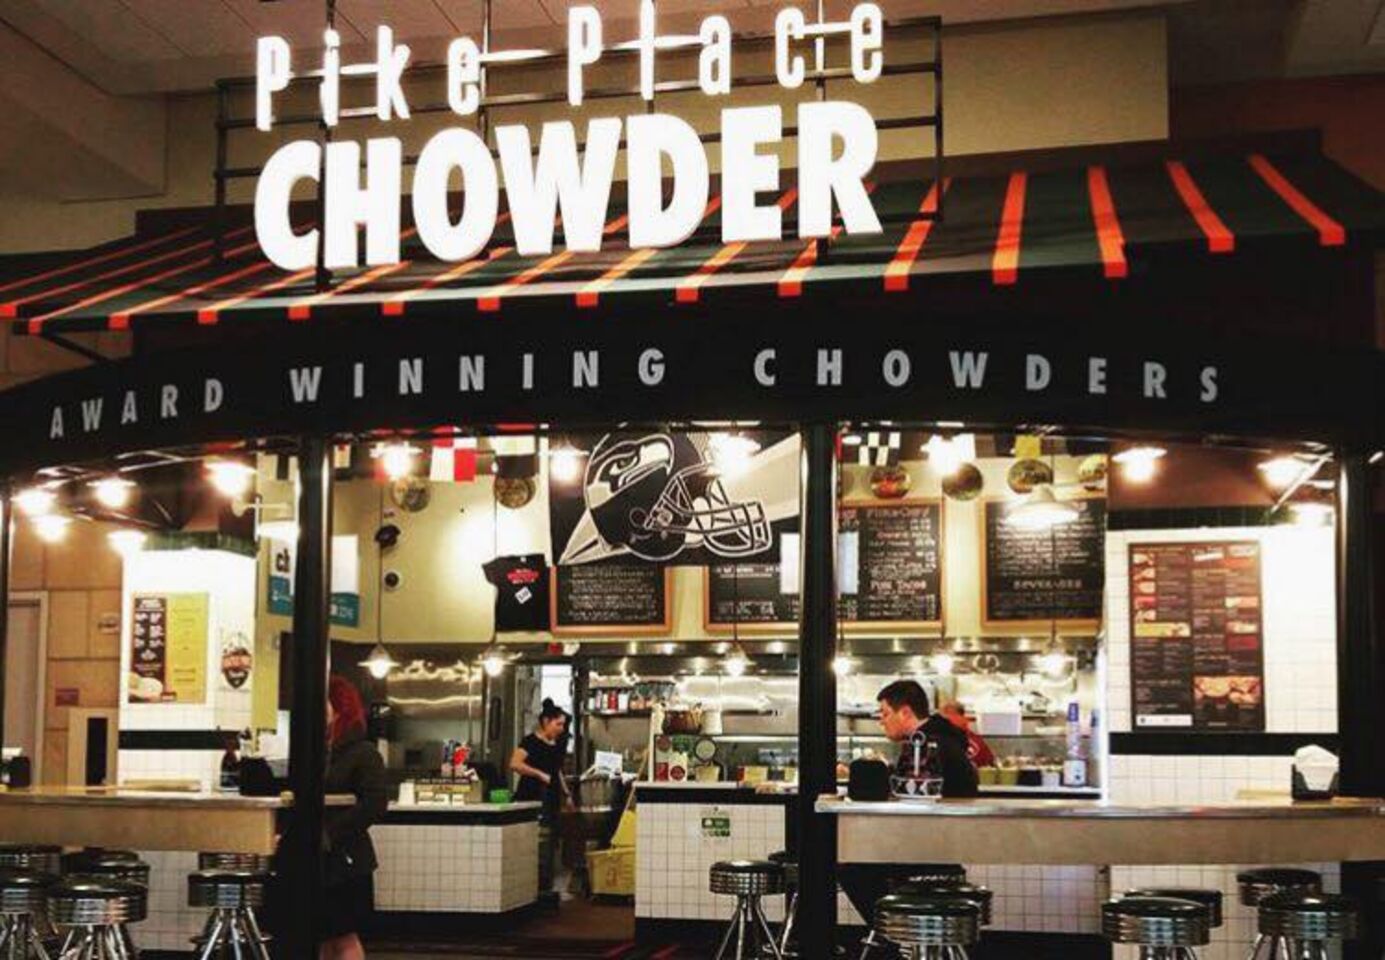 A photo of Pike Place Chowder